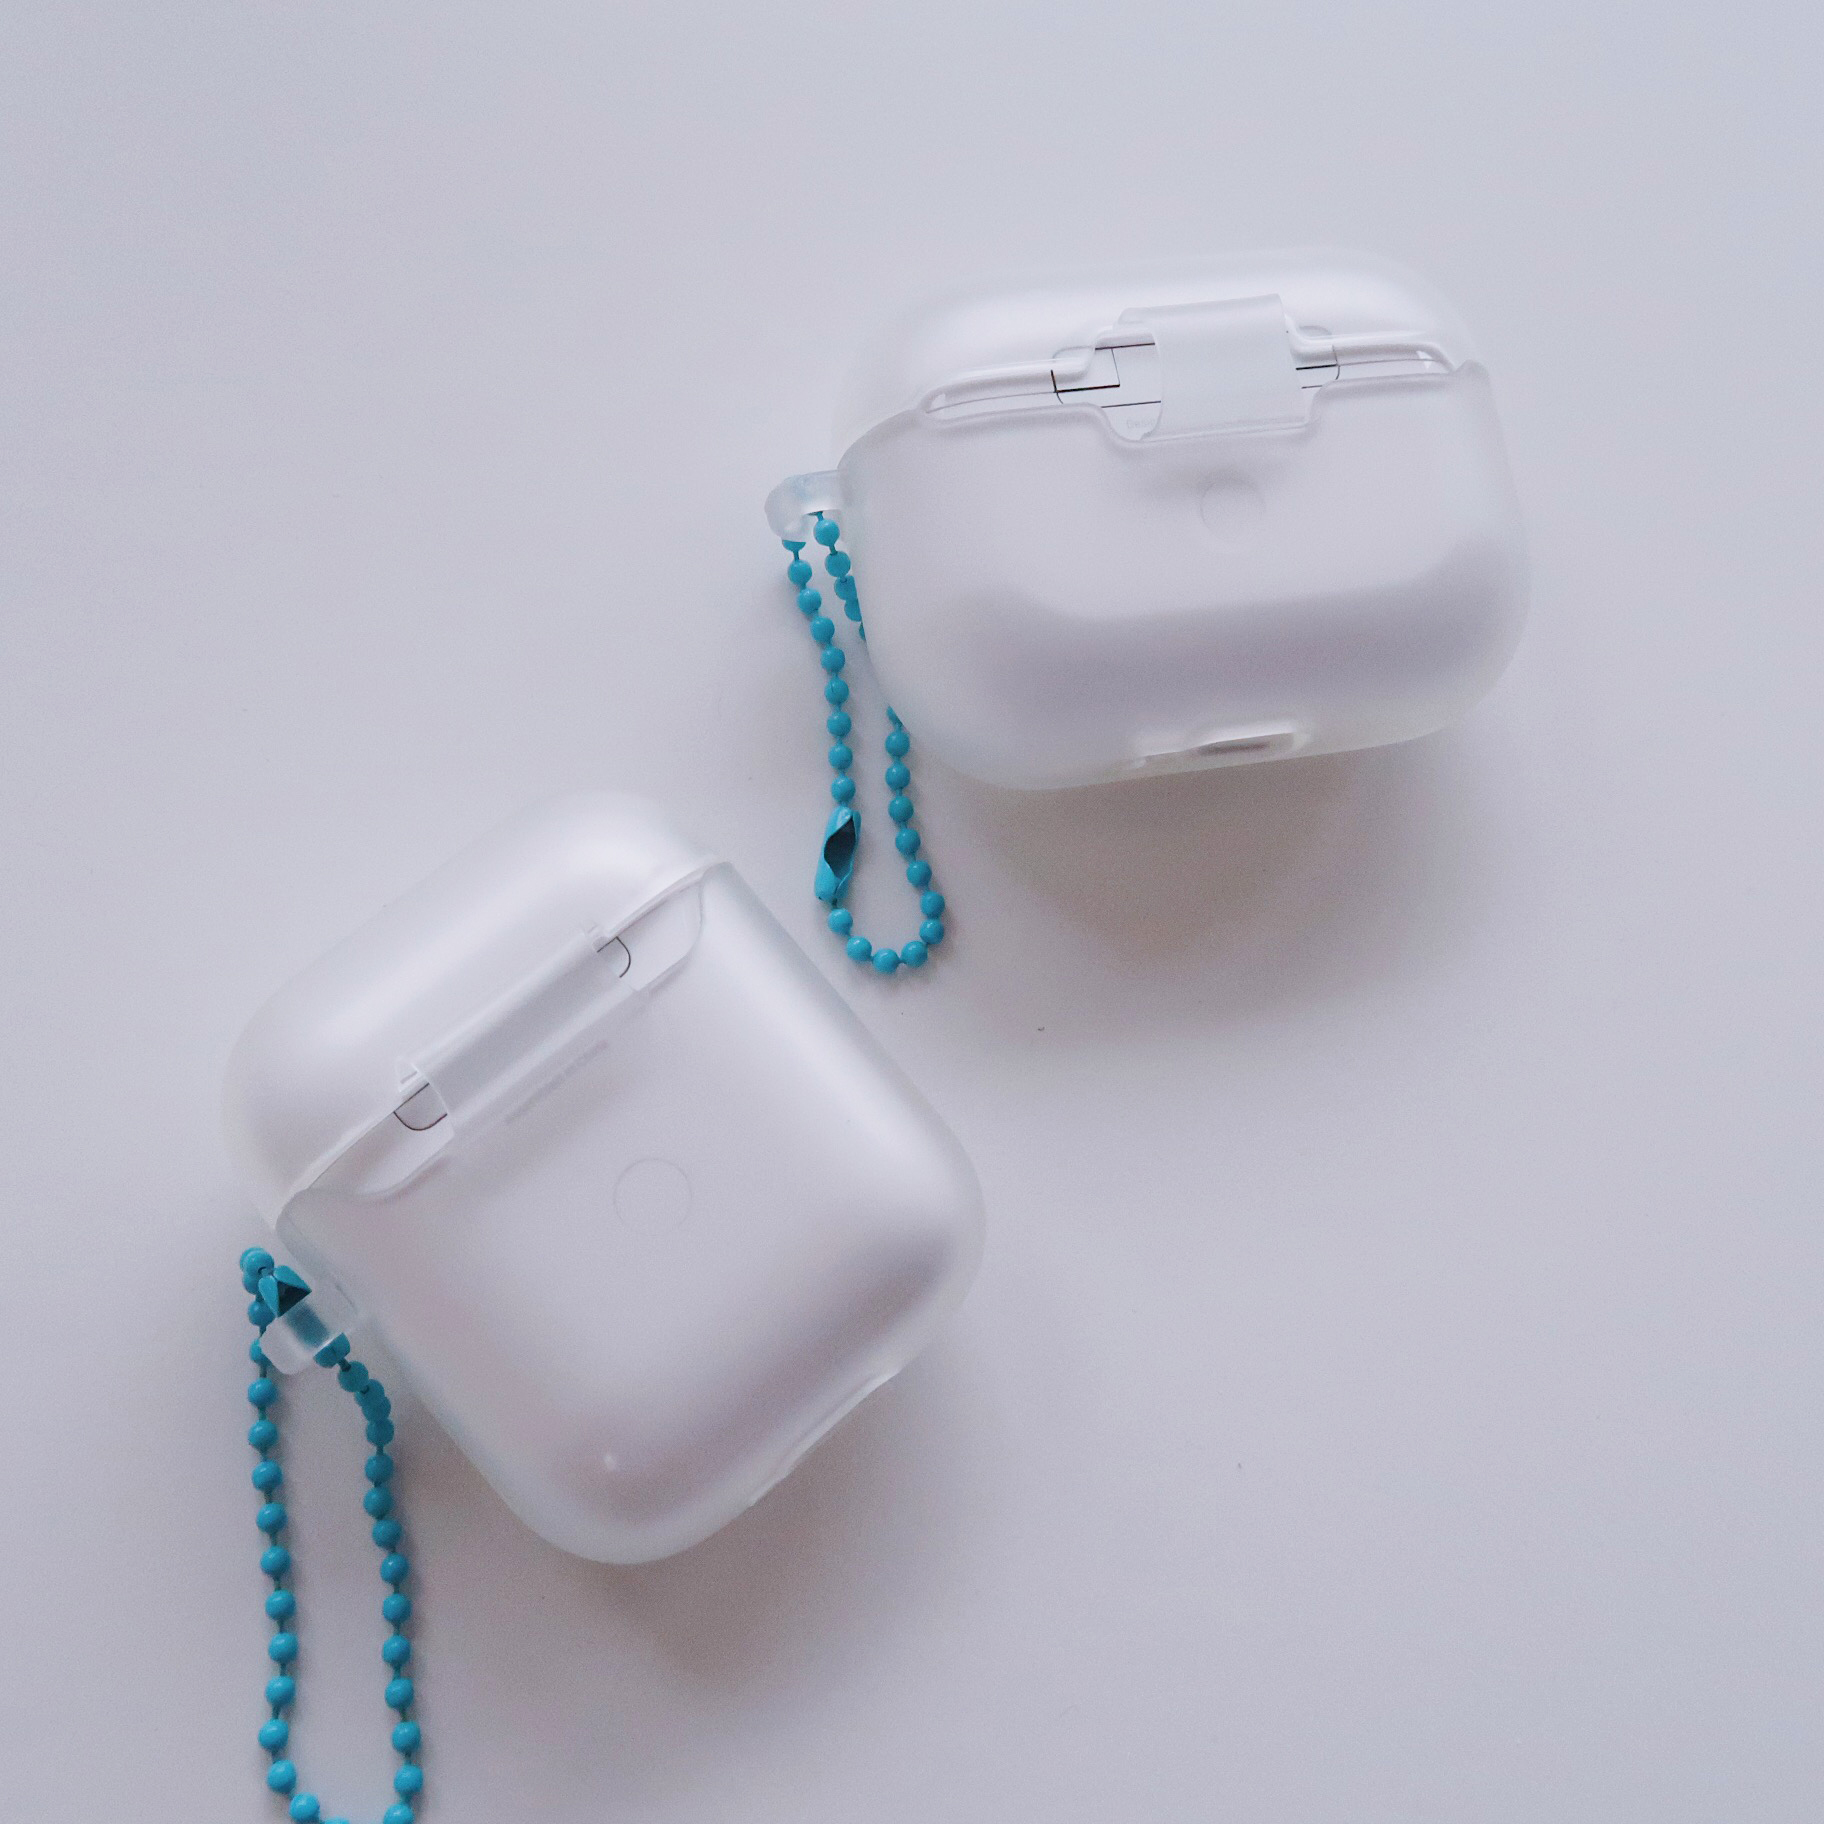 AirPods 藍芽耳機保護套 軟綿綿富士山 連體霧面含吊飾